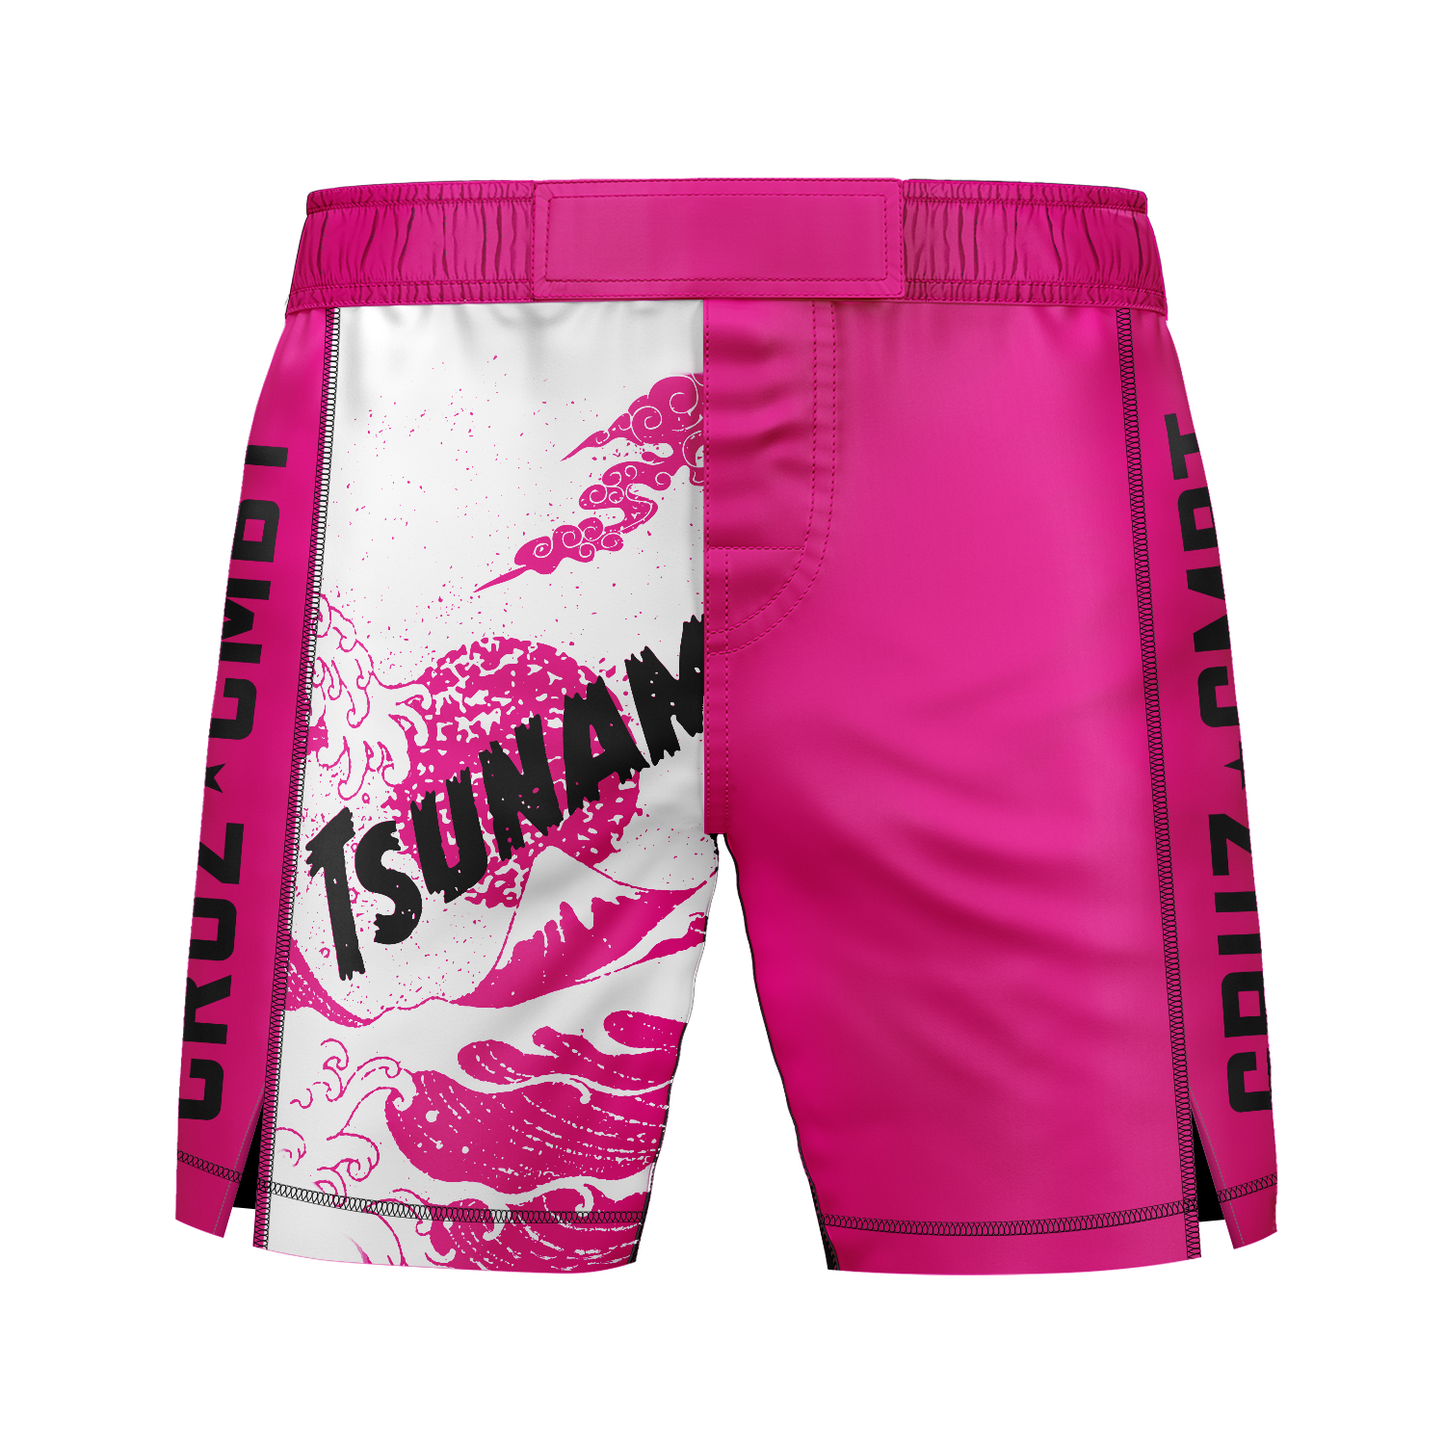 Tsunami JJ men's 7" fight shorts Pink Wave, pink